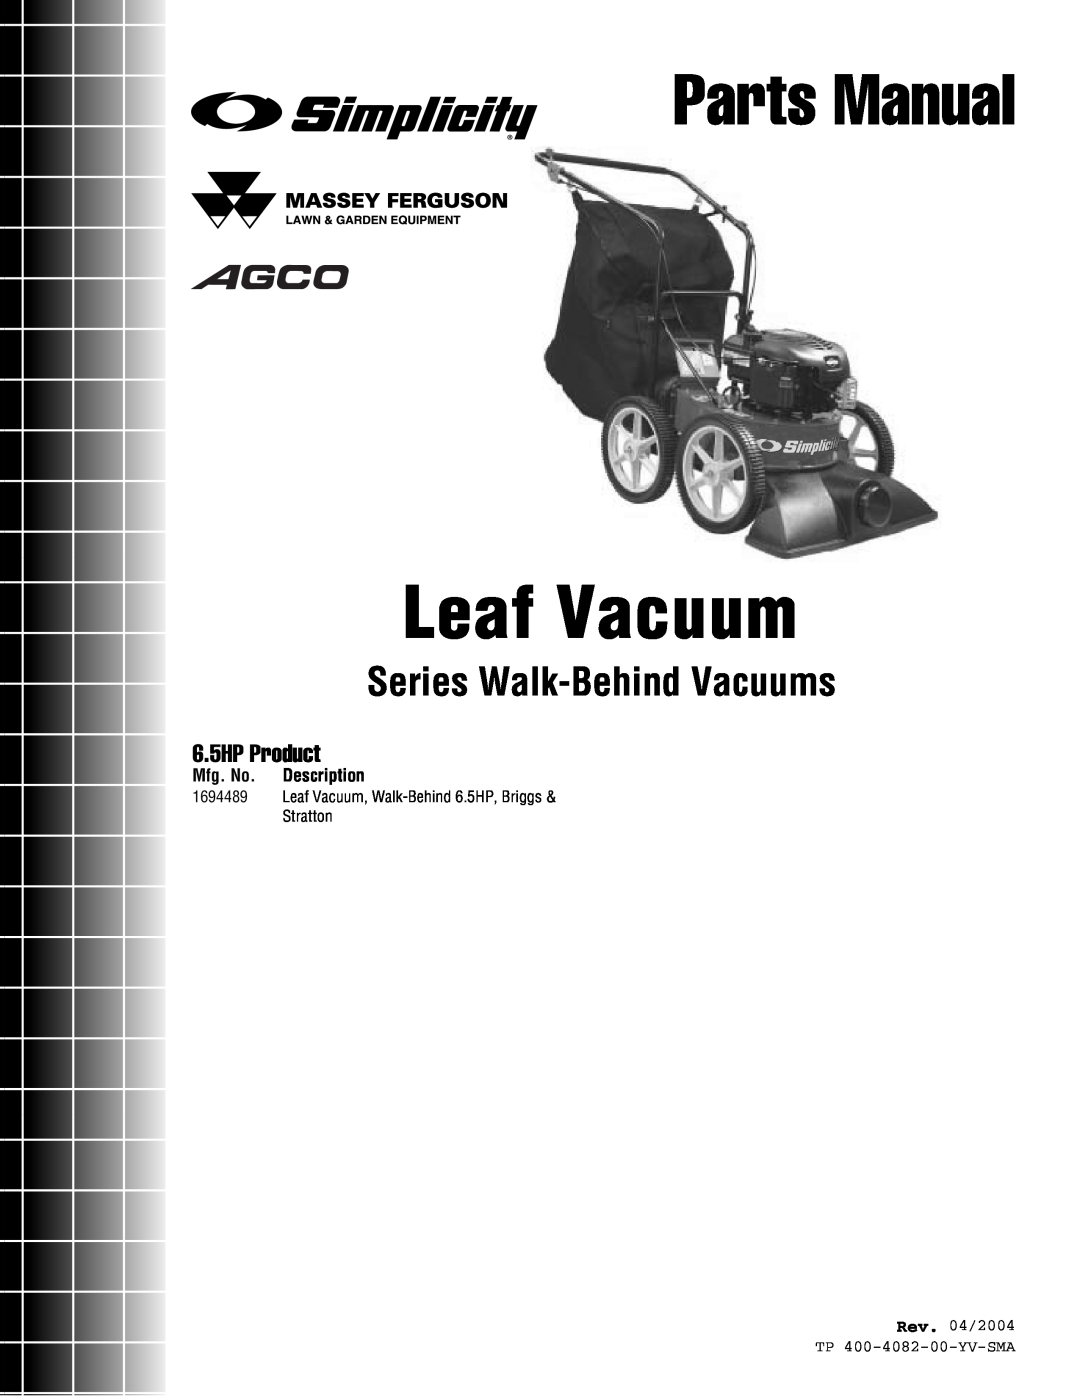 Simplicity 1694489 manual Mfg. No. Description, Rev. 04/2004 TP 400-4082-00-YV-SMA, Parts Manual, Leaf Vacuum 